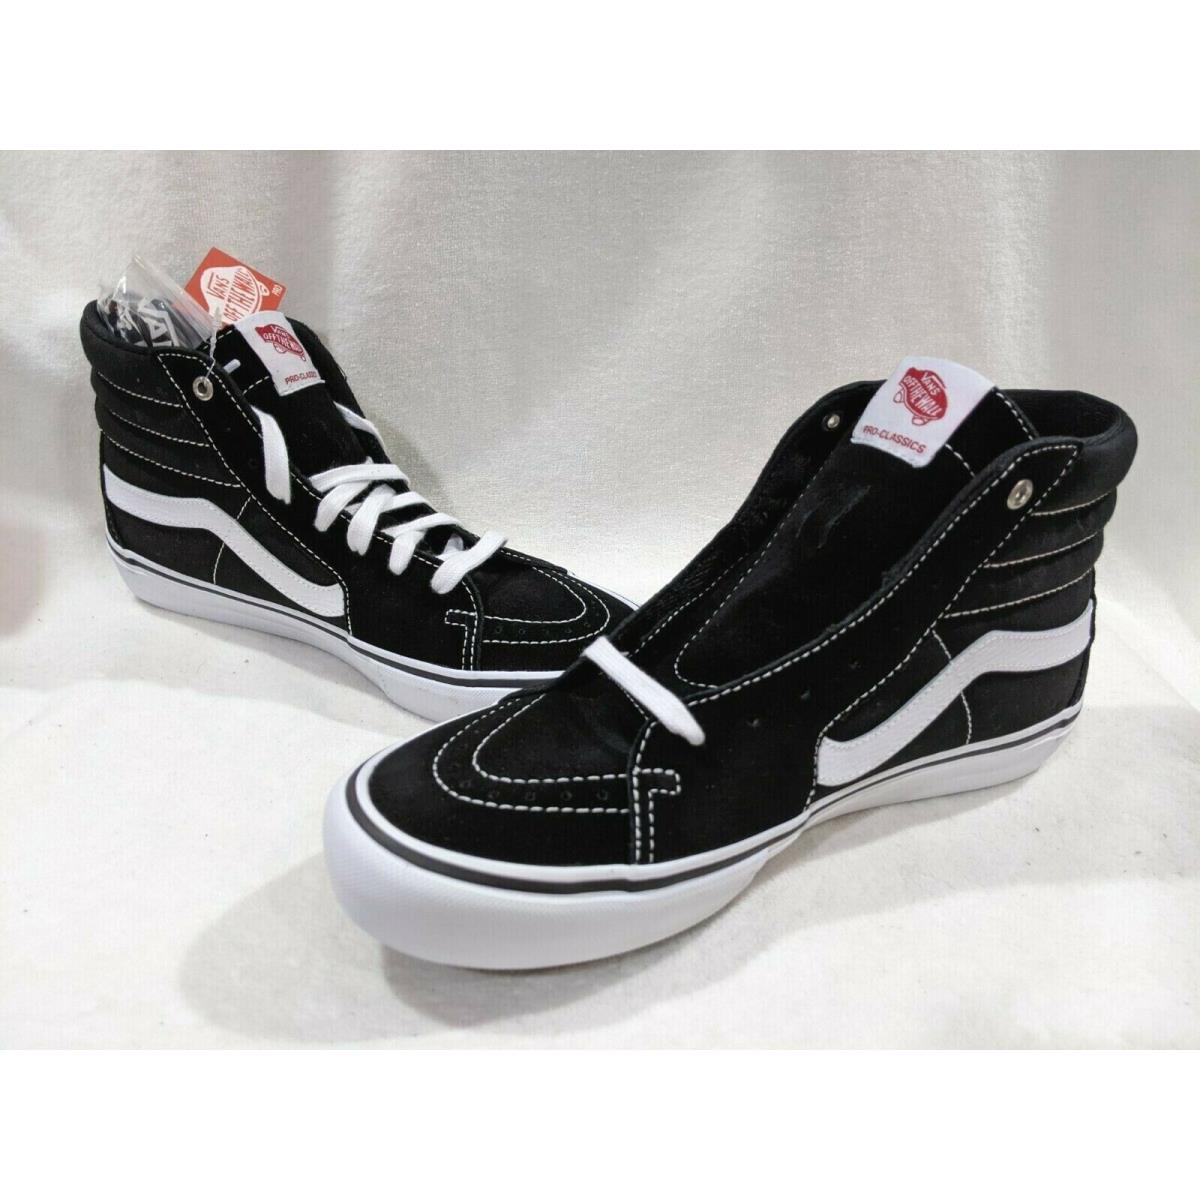 Vans Men`s SK8 Pro Black/white Hi Top Sneakers - Size 9